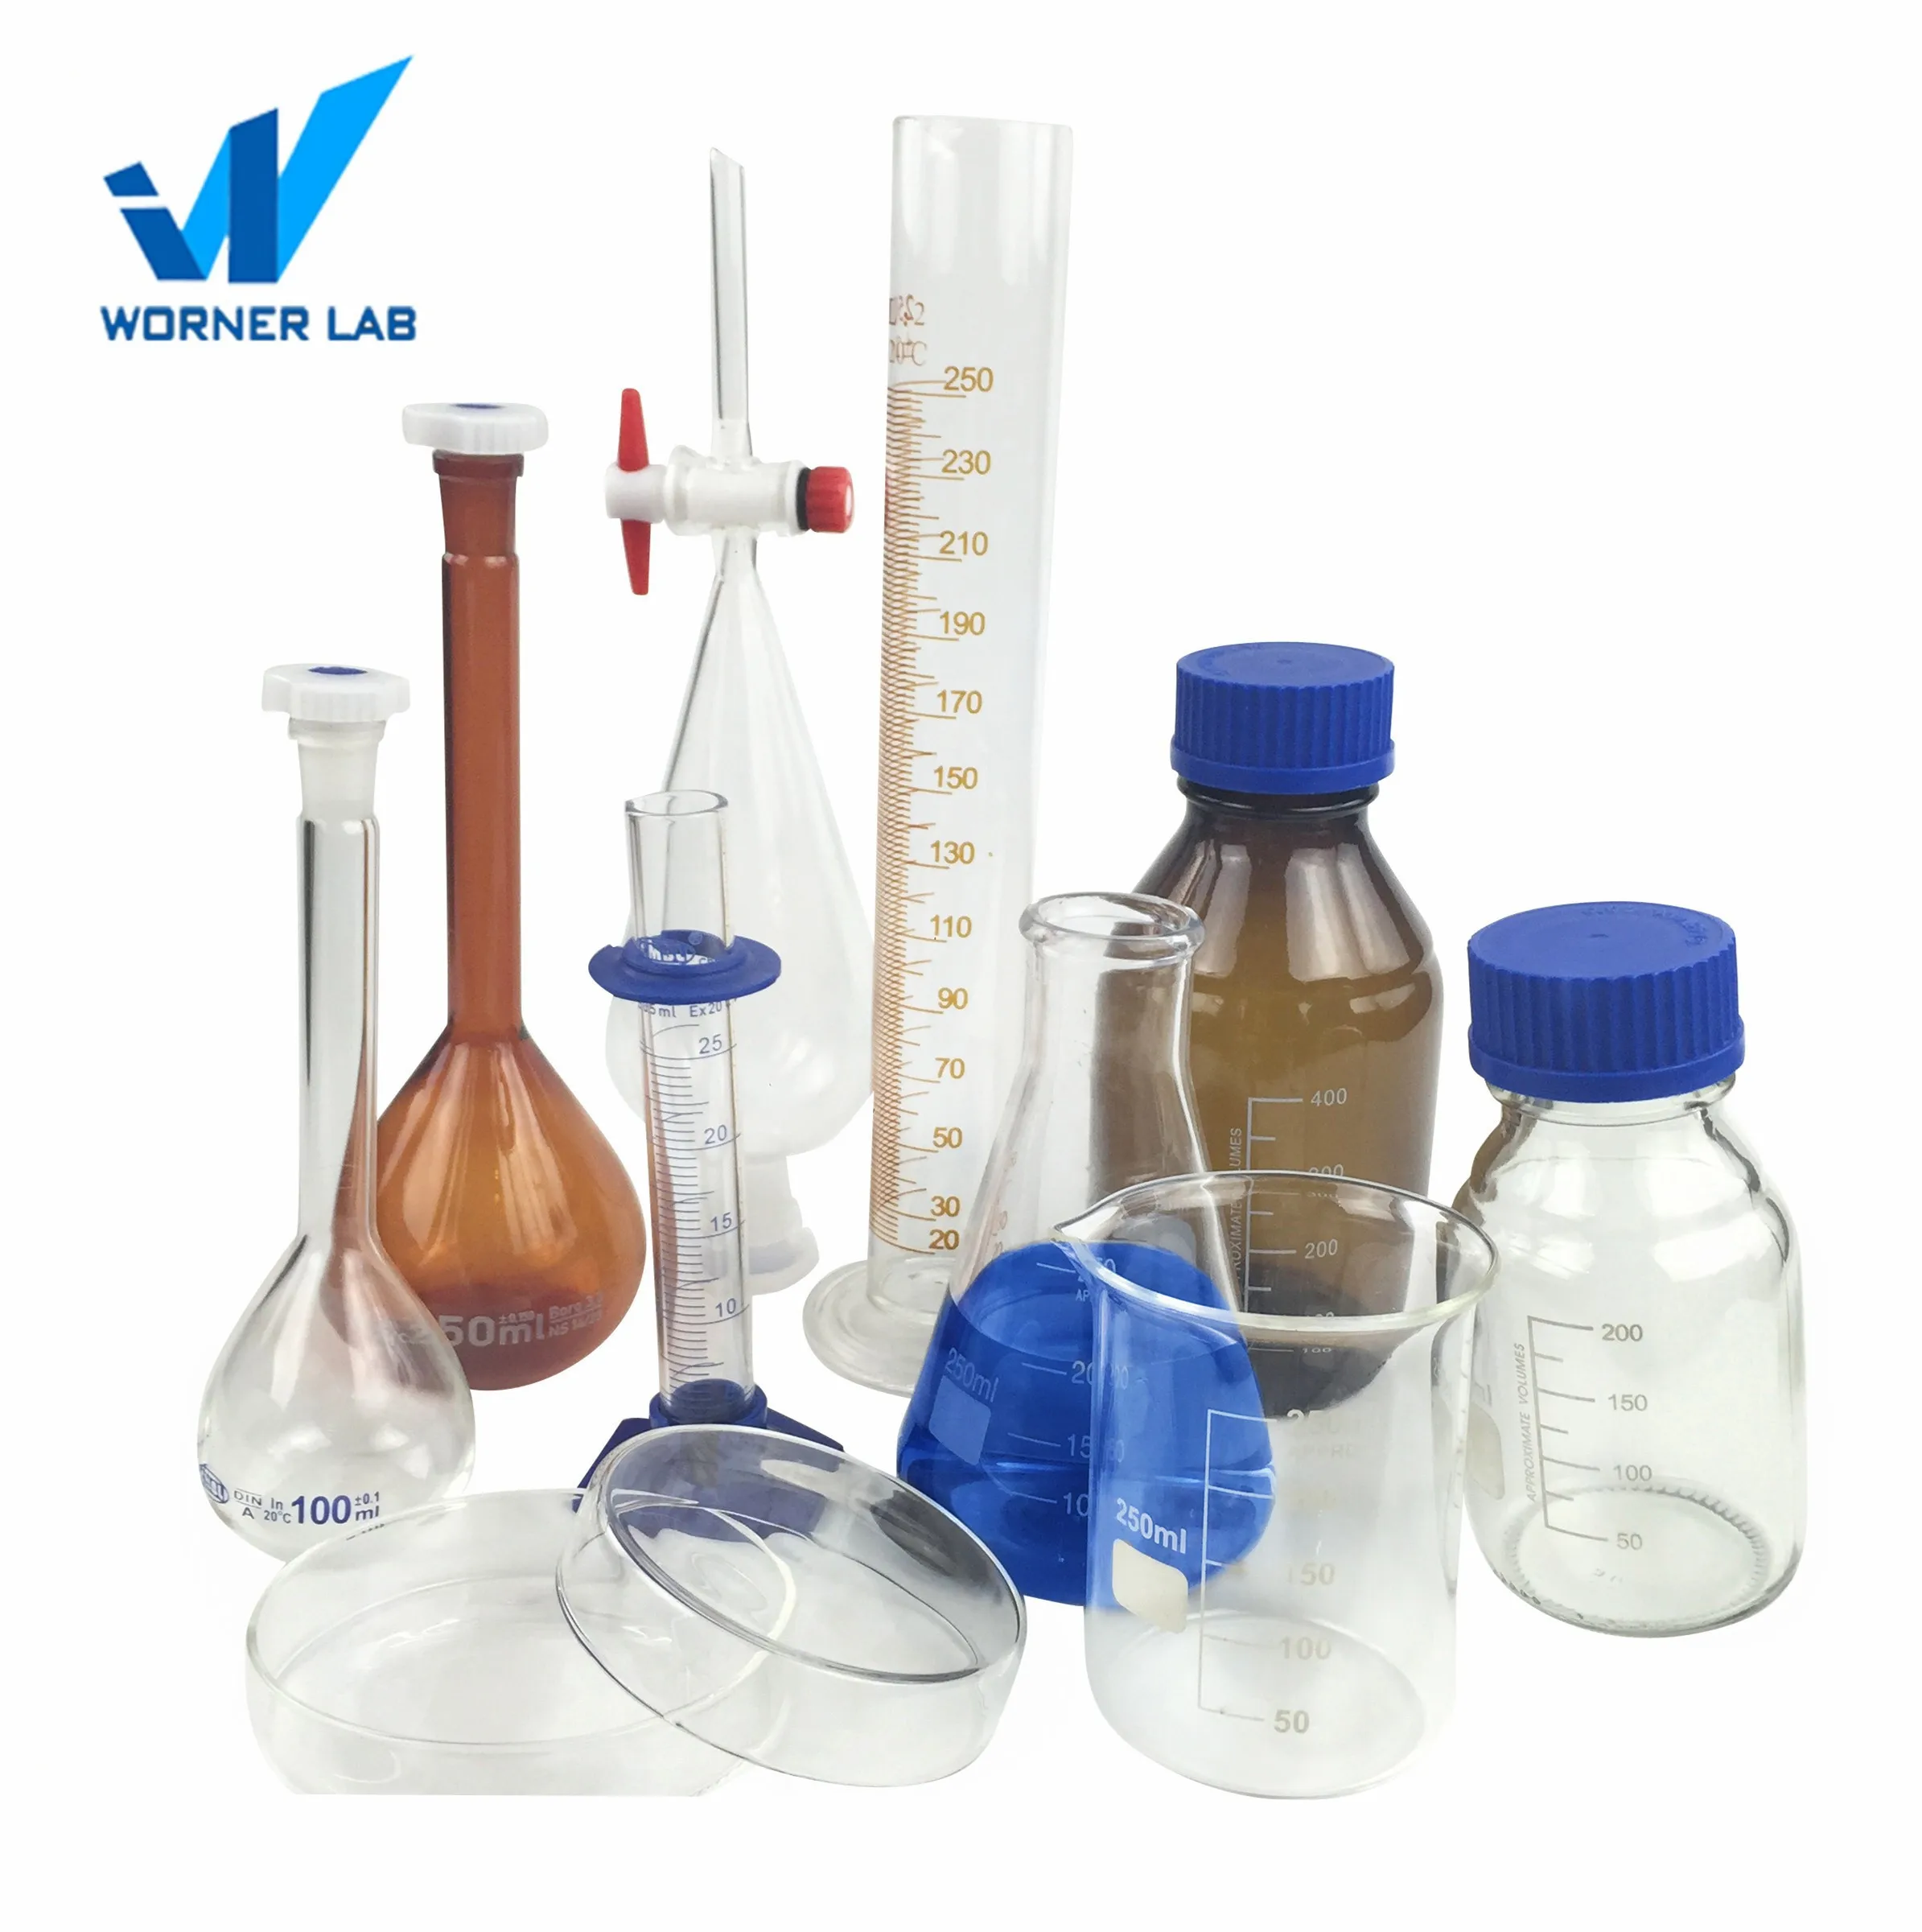 WORNER Labเคมีอุปกรณ์ห้องปฏิบัติการเครื่องแก้ว